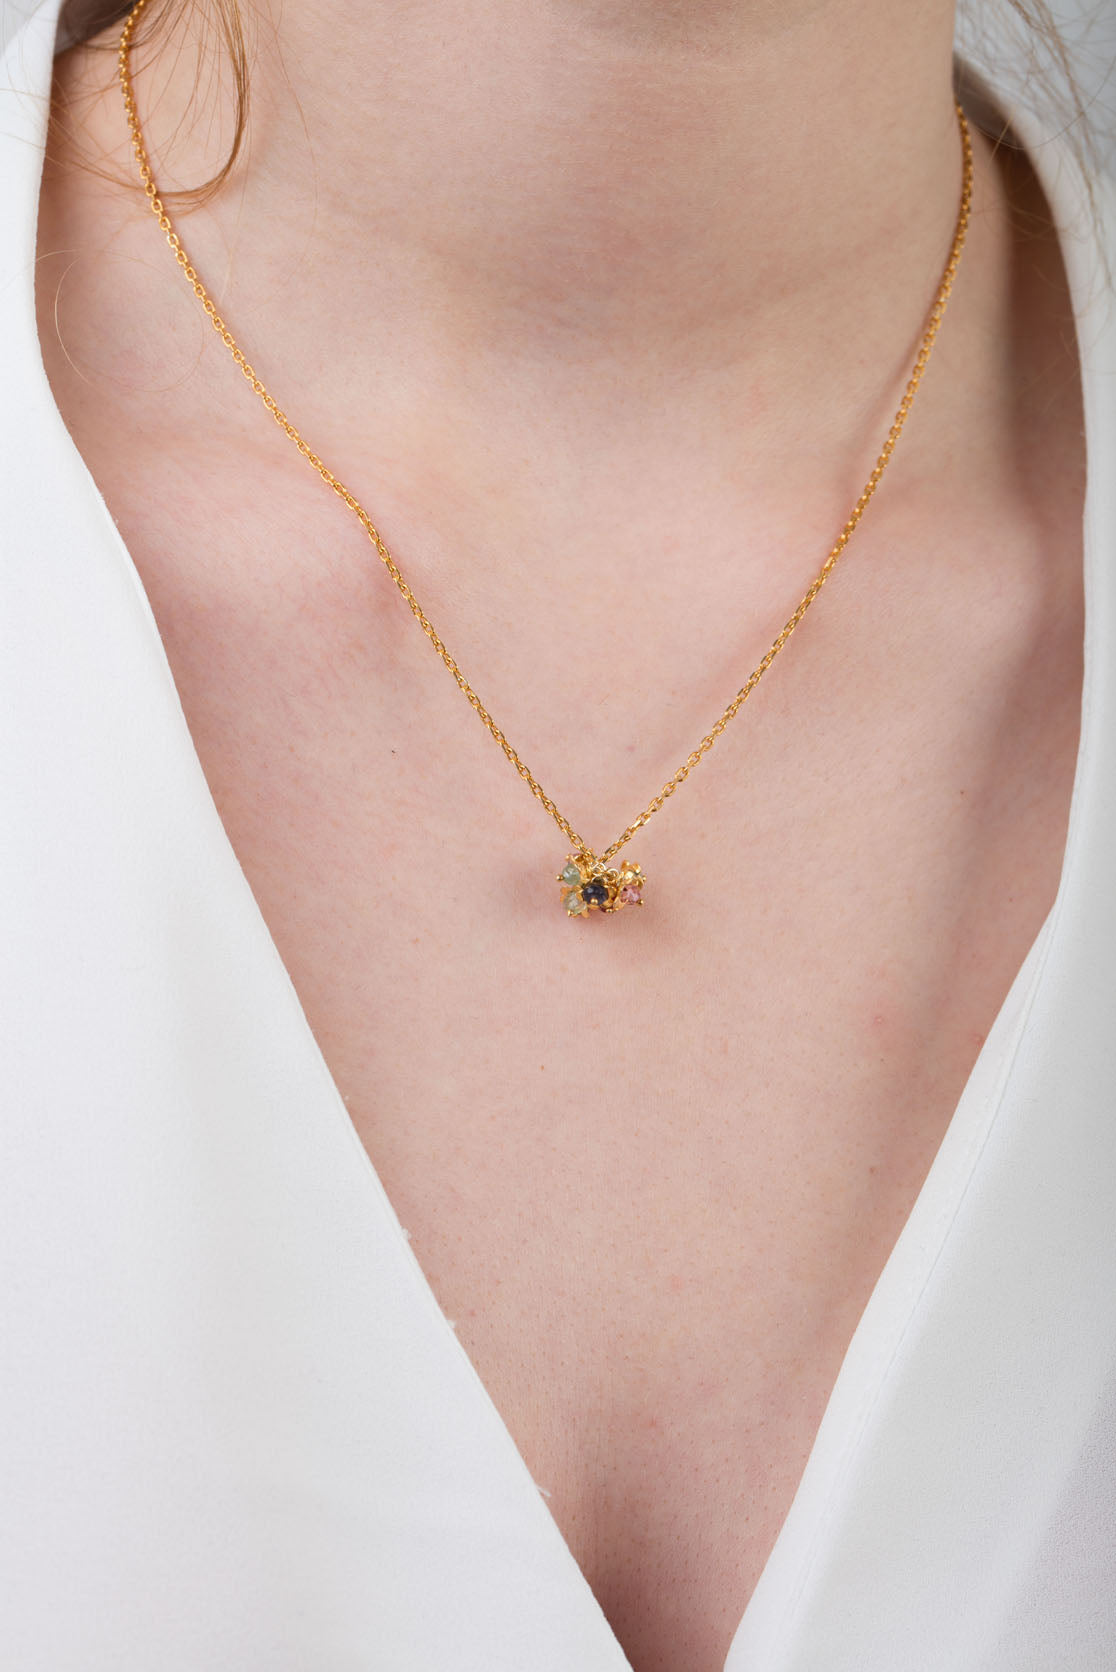 Flower pendant necklace being worn